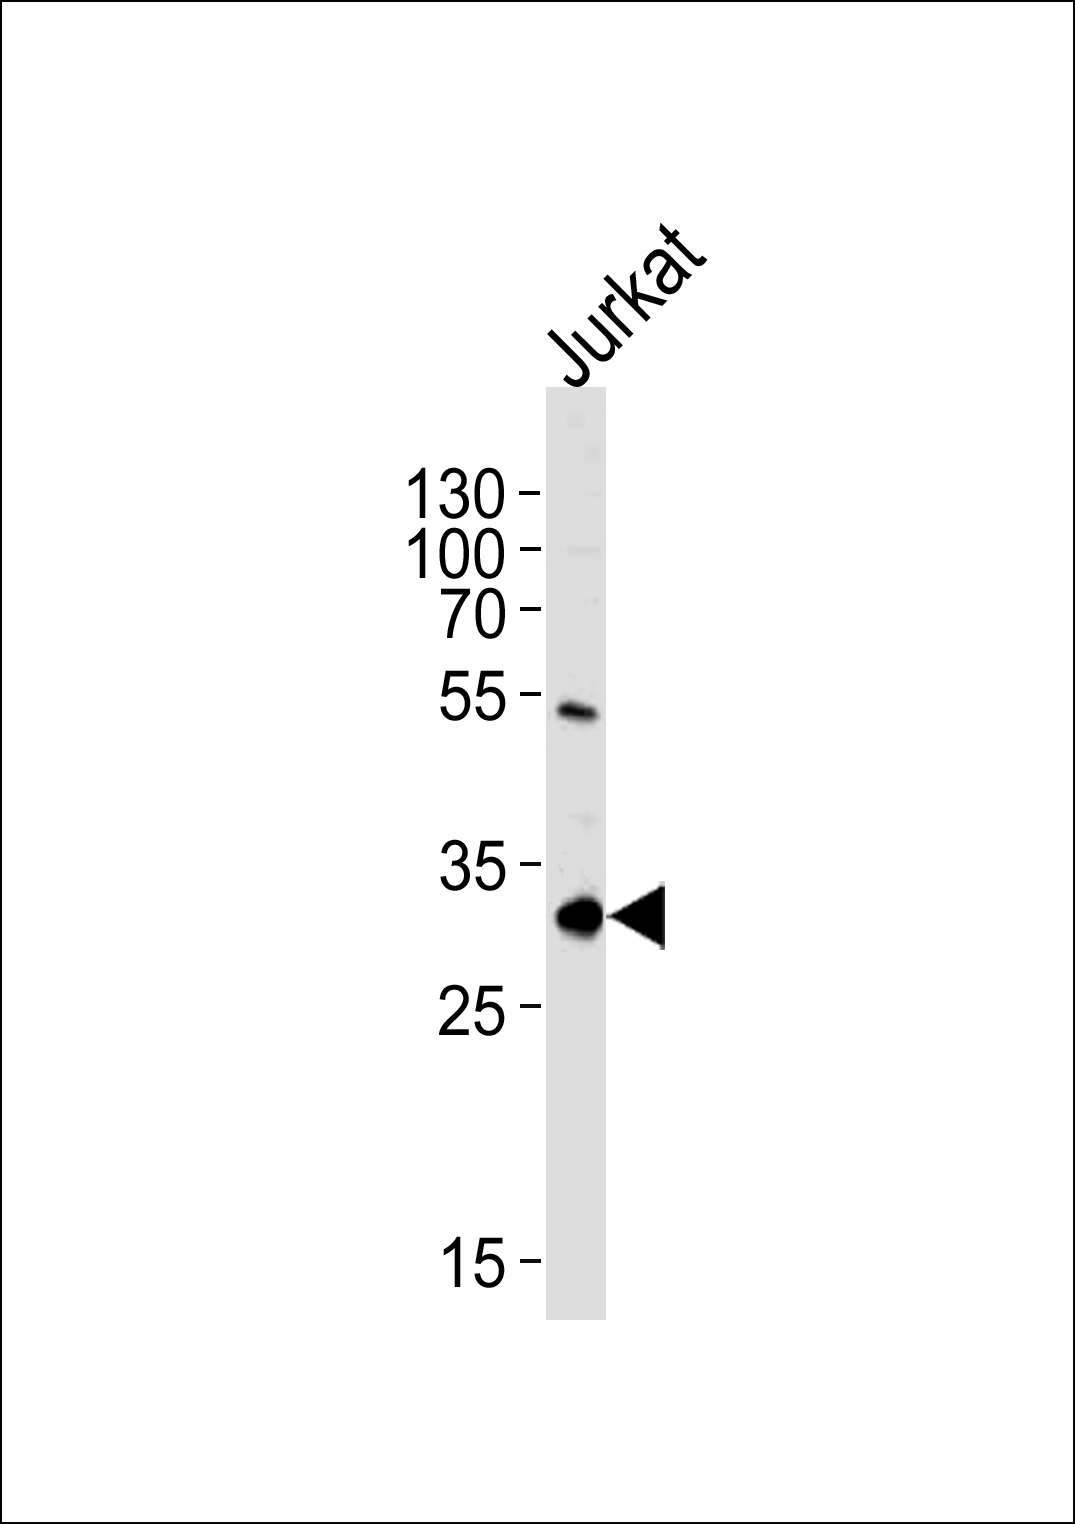 EXOSC2 Antibody(N-term) (Cat. #AP20534a) western blot analysis in Jurkat cell line lysates (35ug/lane).This demonstrates the EXOSC2 antibody detected the EXOSC2 protein (arrow).